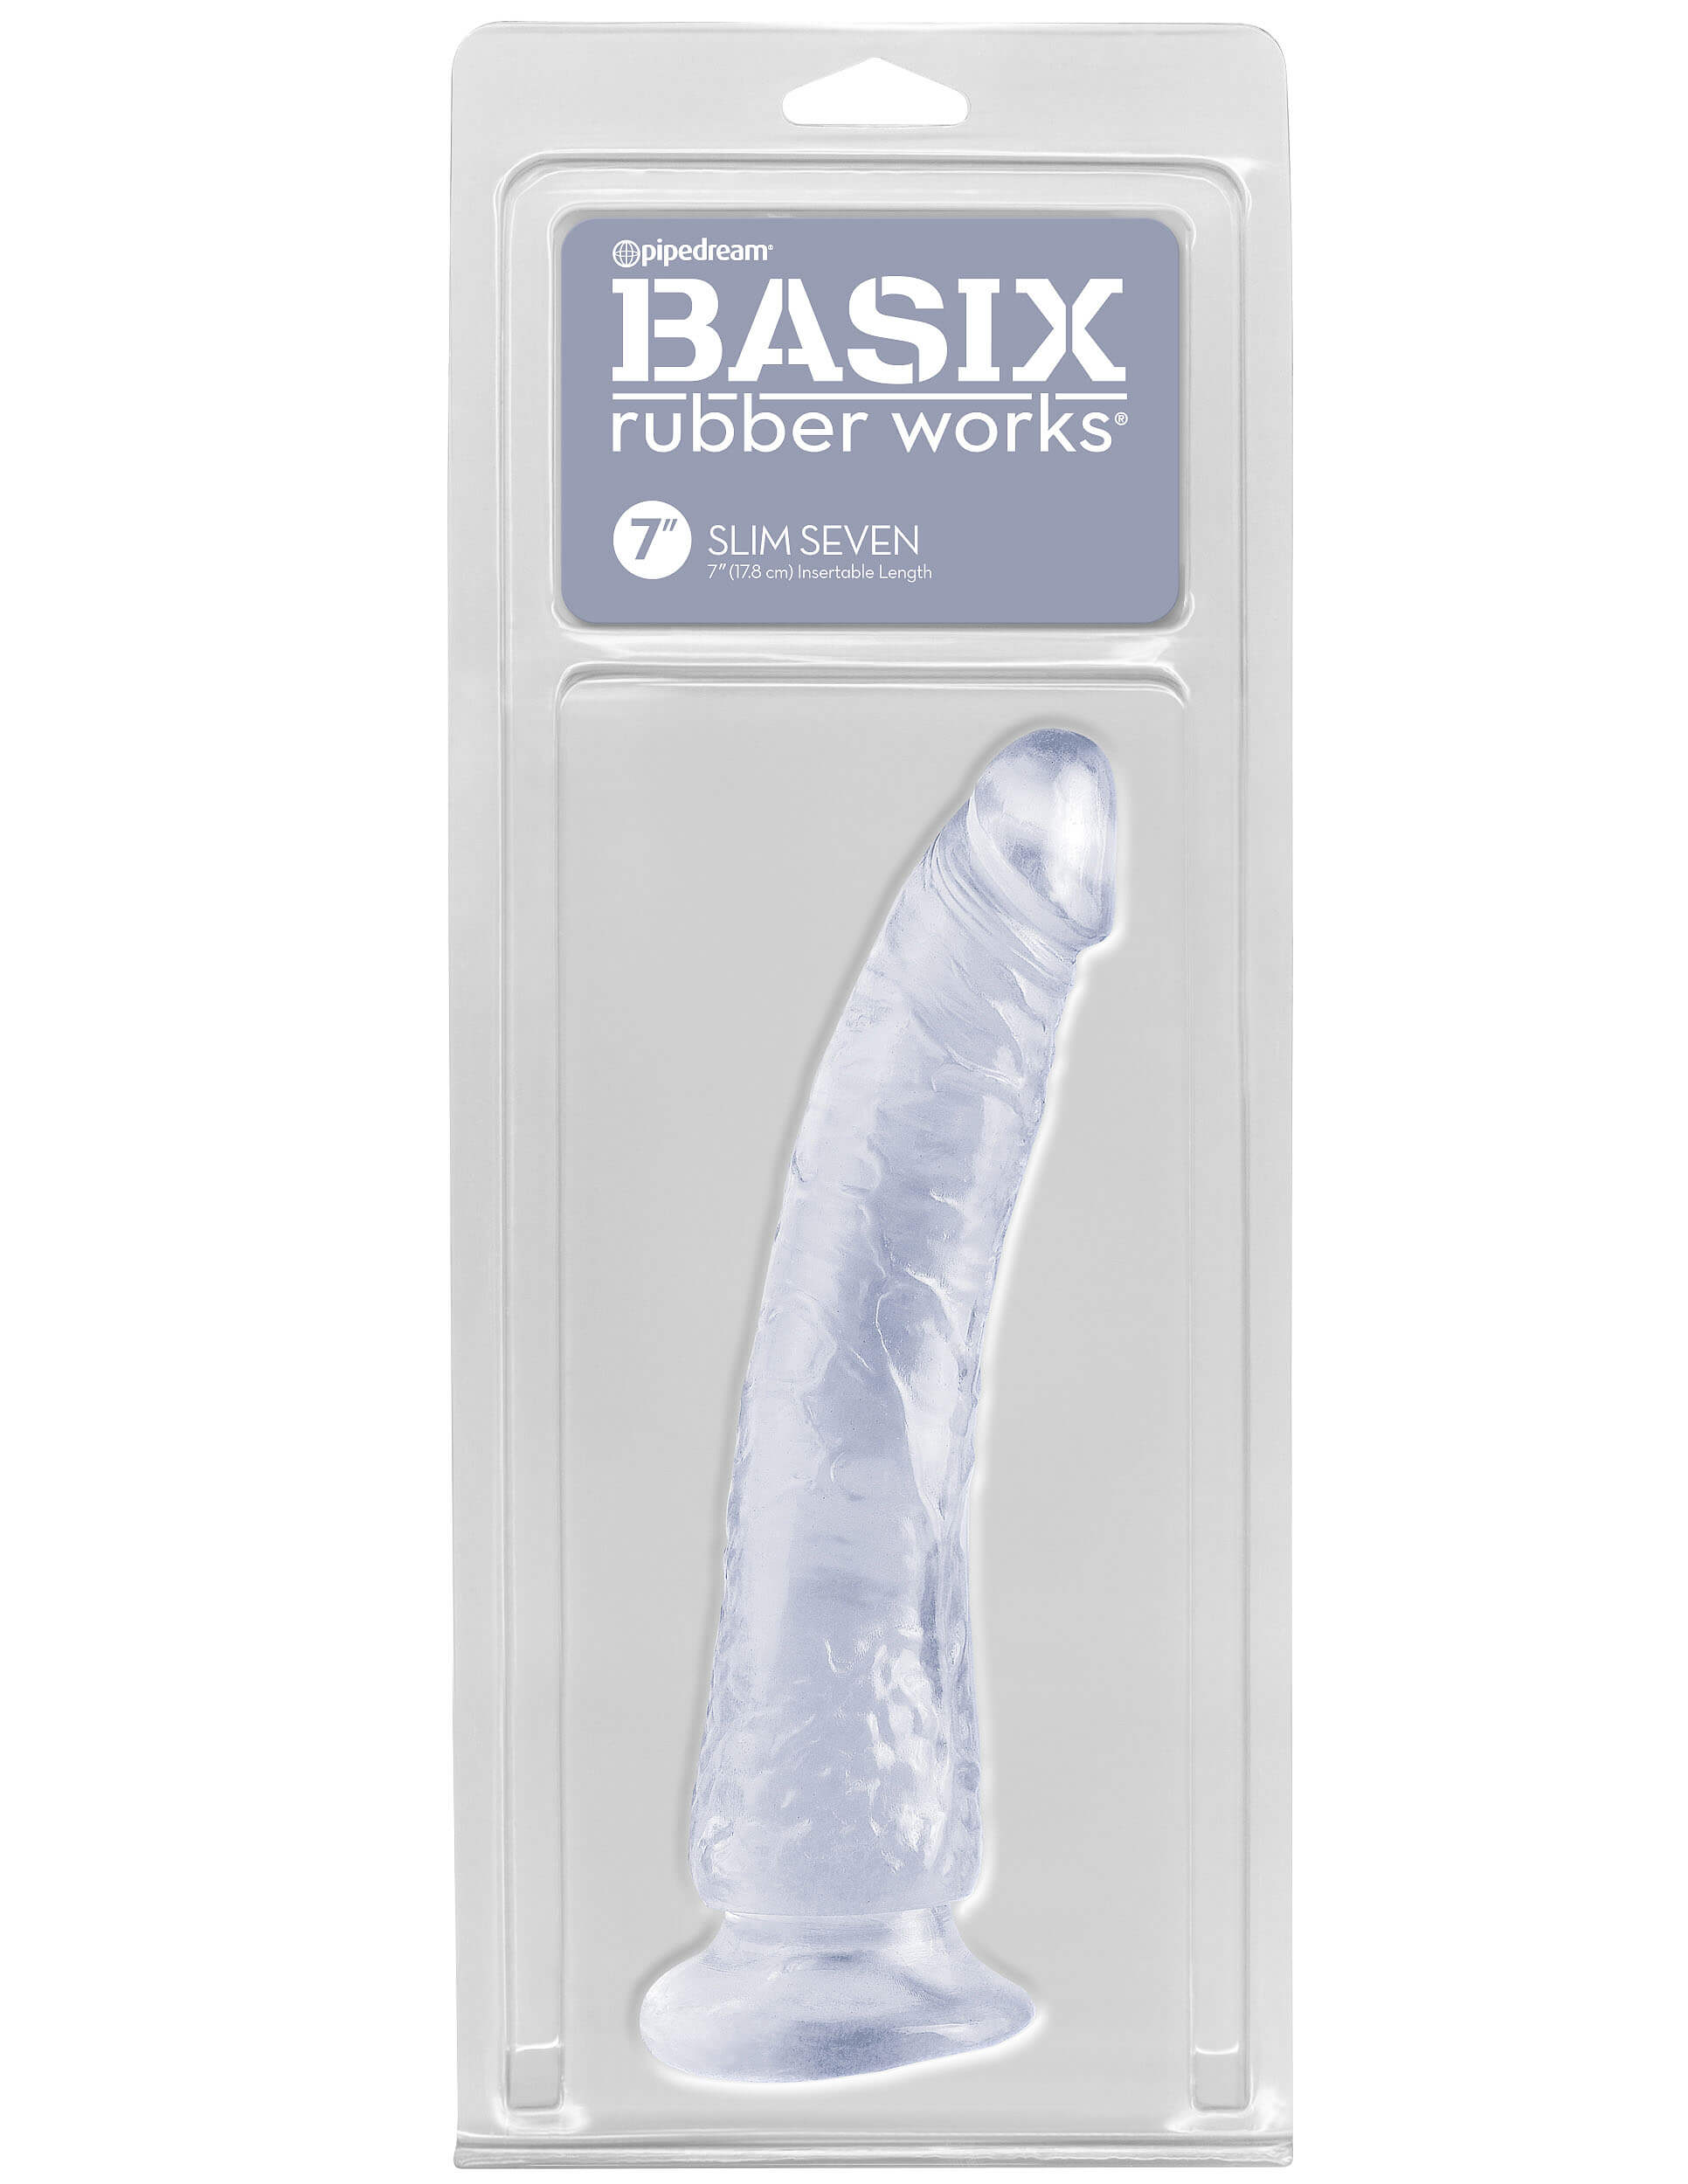 Basix Rubber Works Slim 7 clear